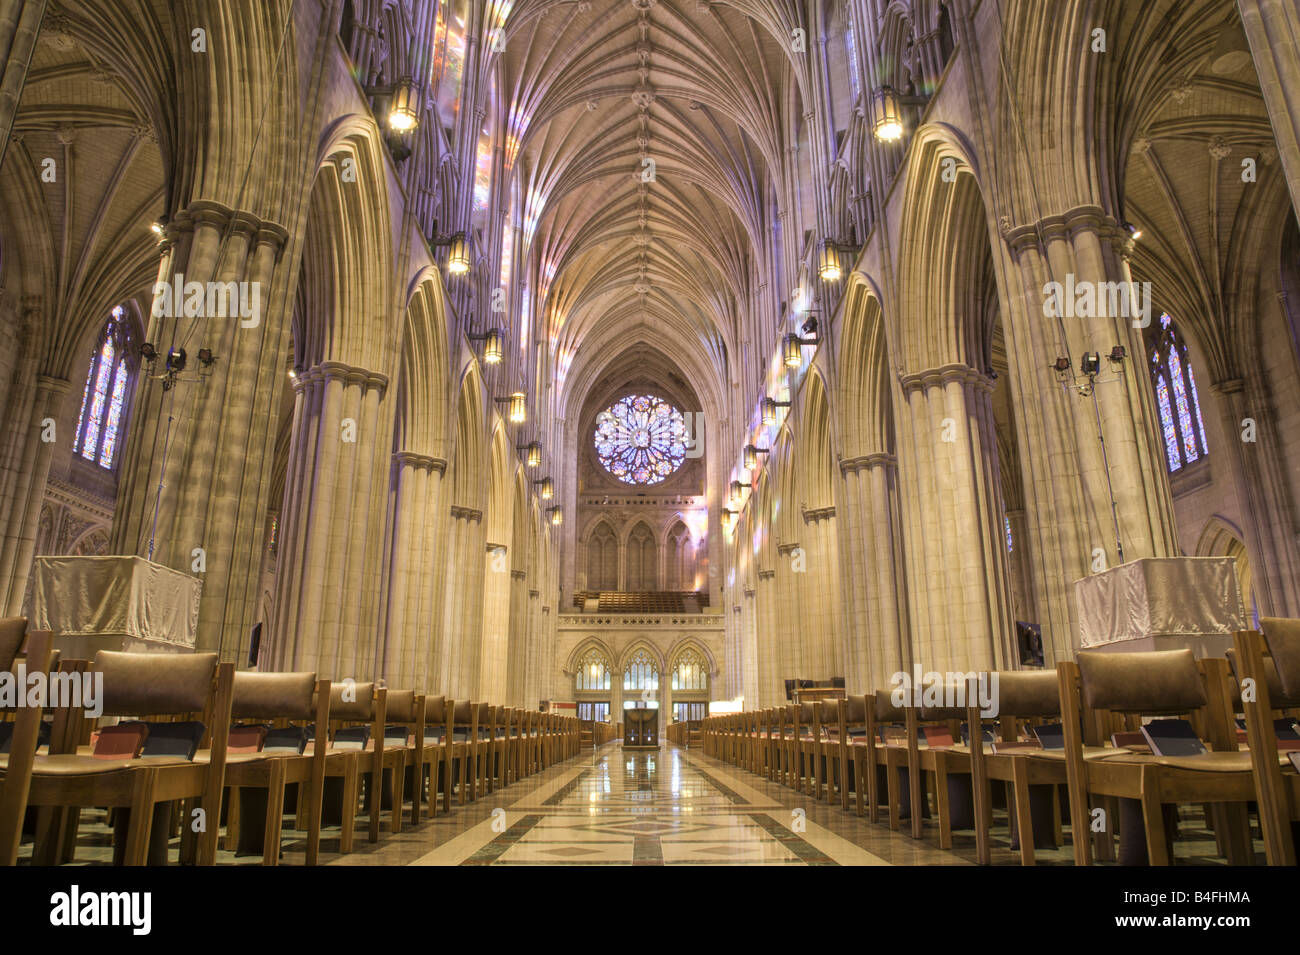 Washington national cathedral interior hi-res stock photography